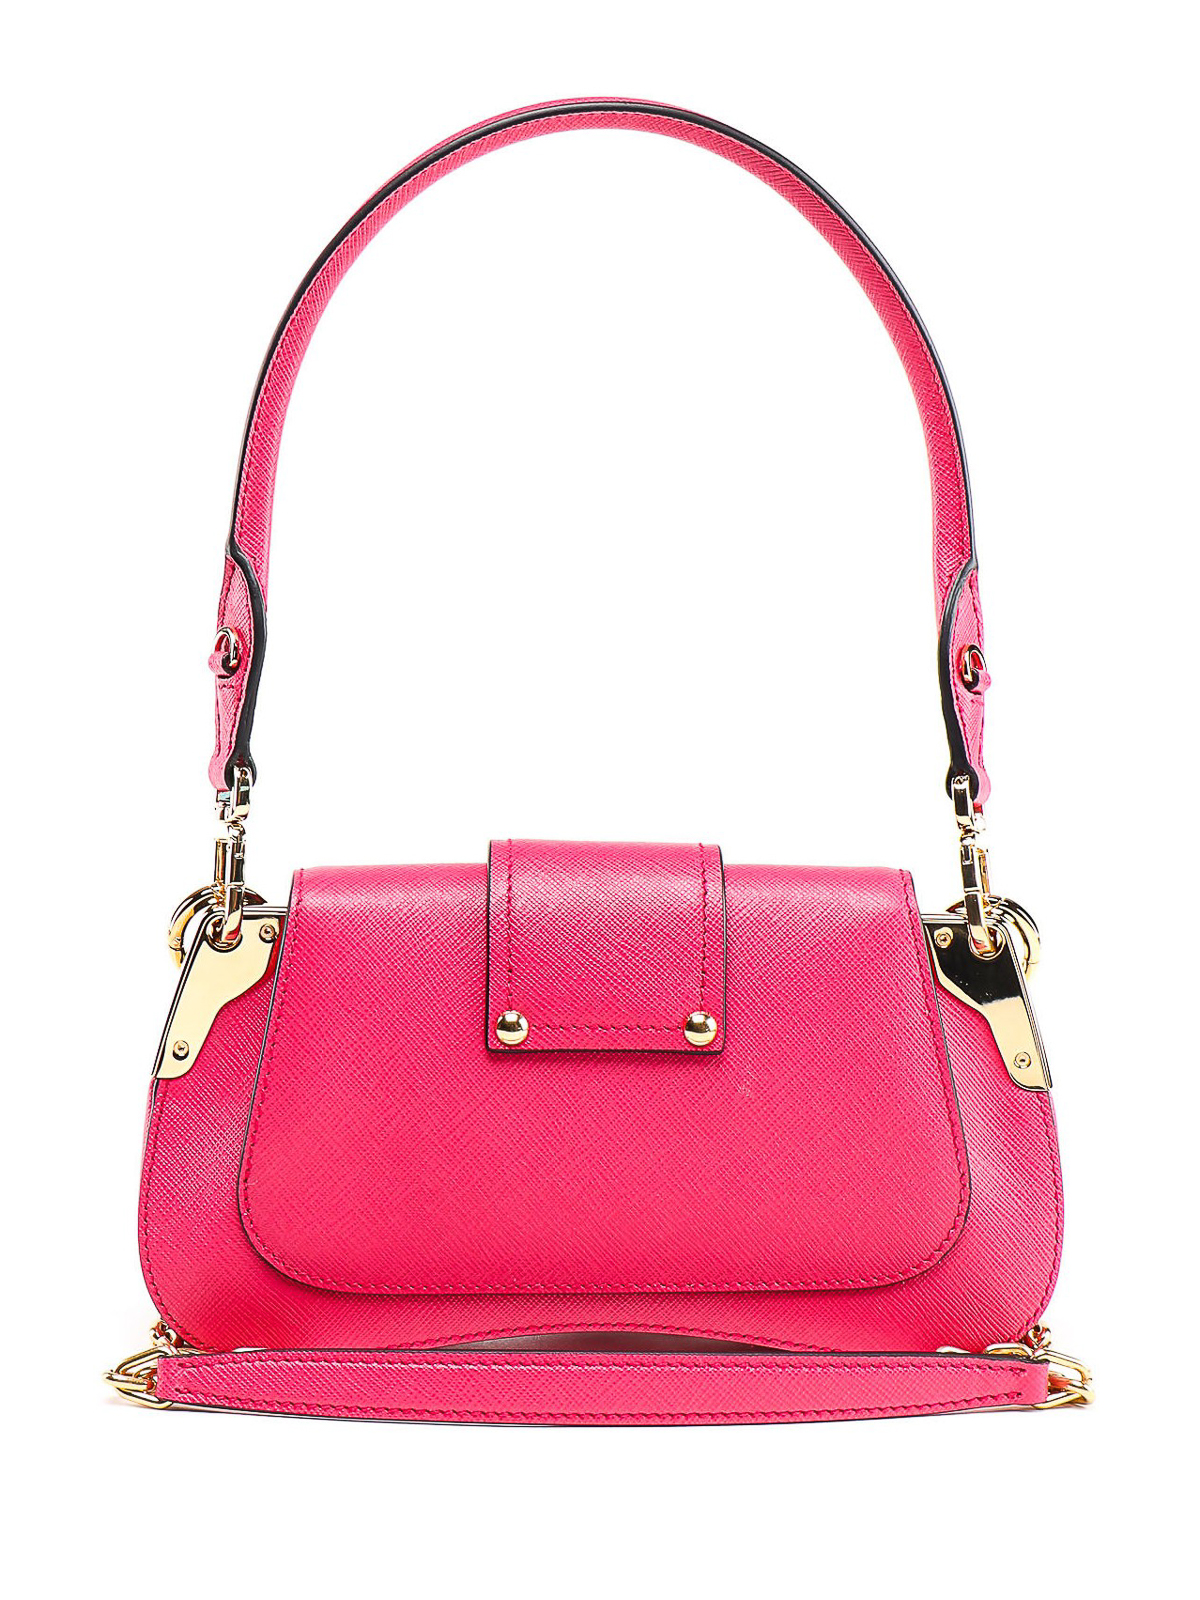 Prada Women's Saffiano Leather Shoulder Tote Handbag